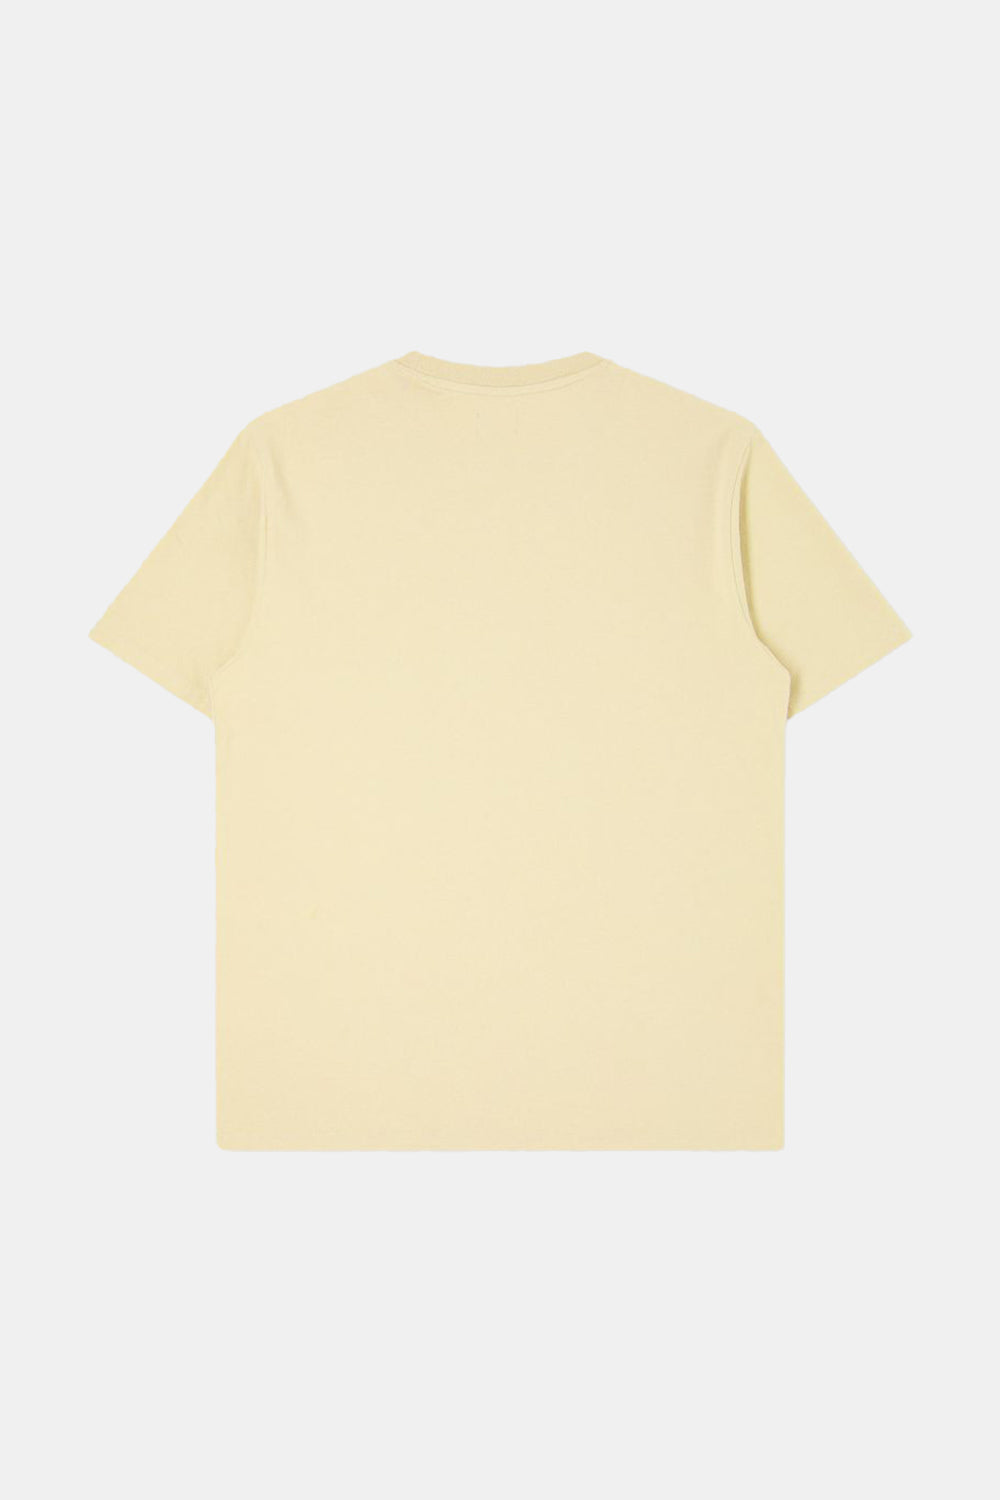 Edwin Japanese Sun T-Shirt (Tender Yellow)